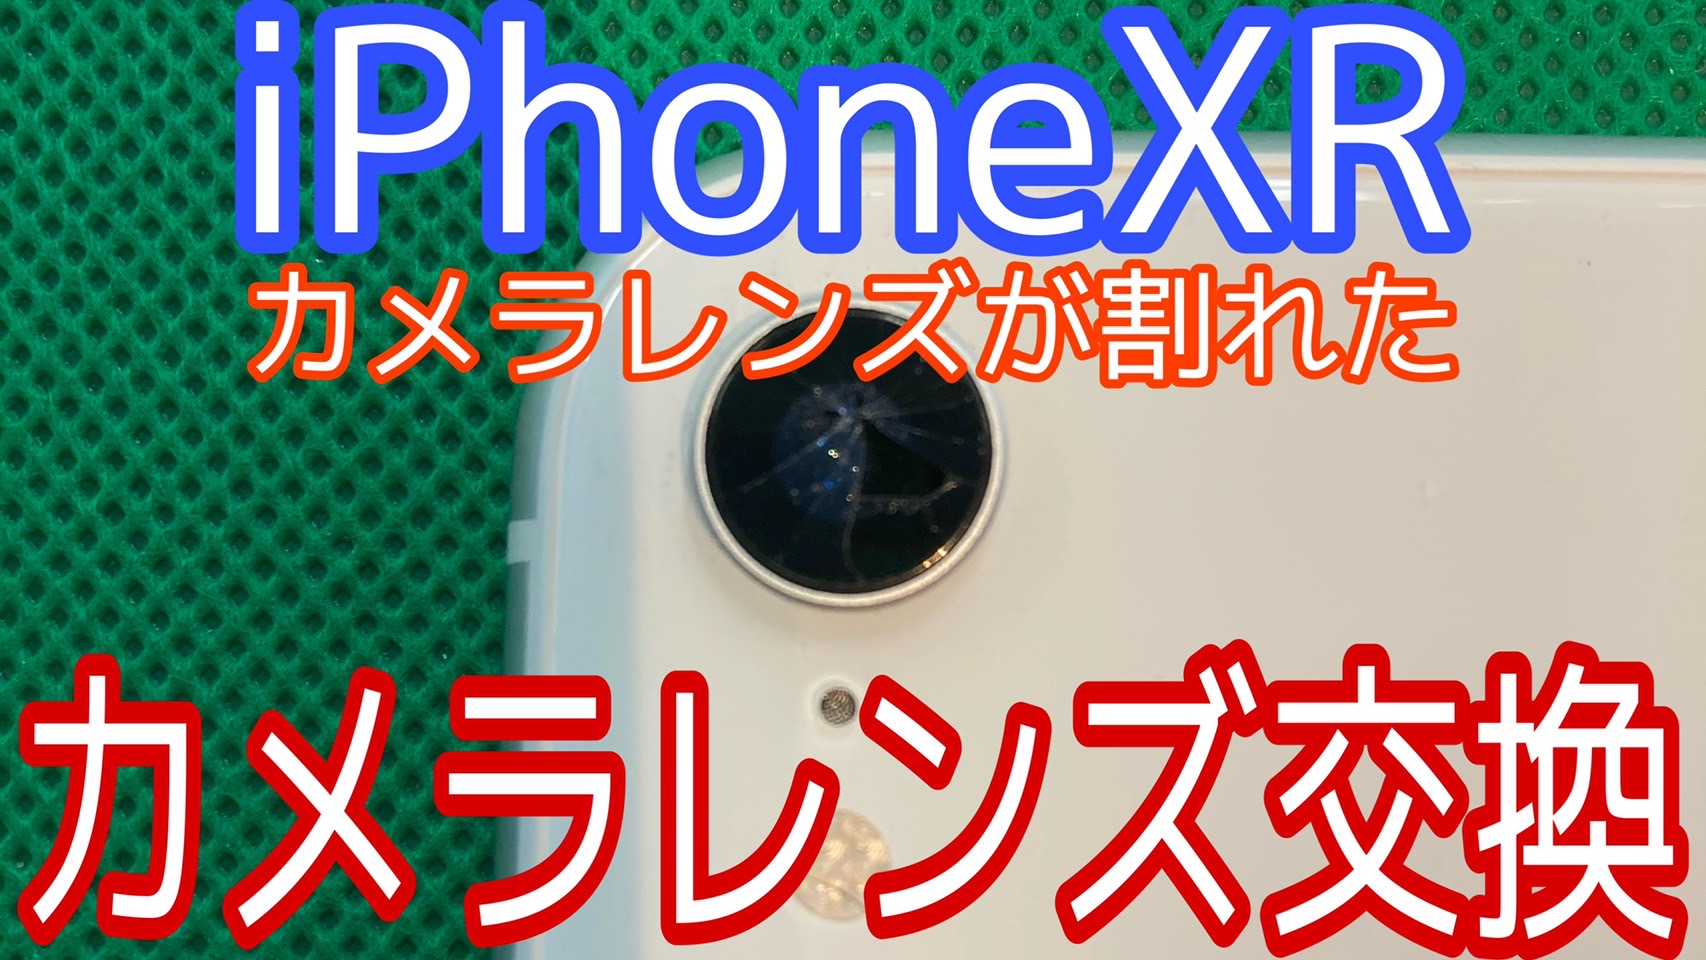 iPhoneXRアイキャッチ画像